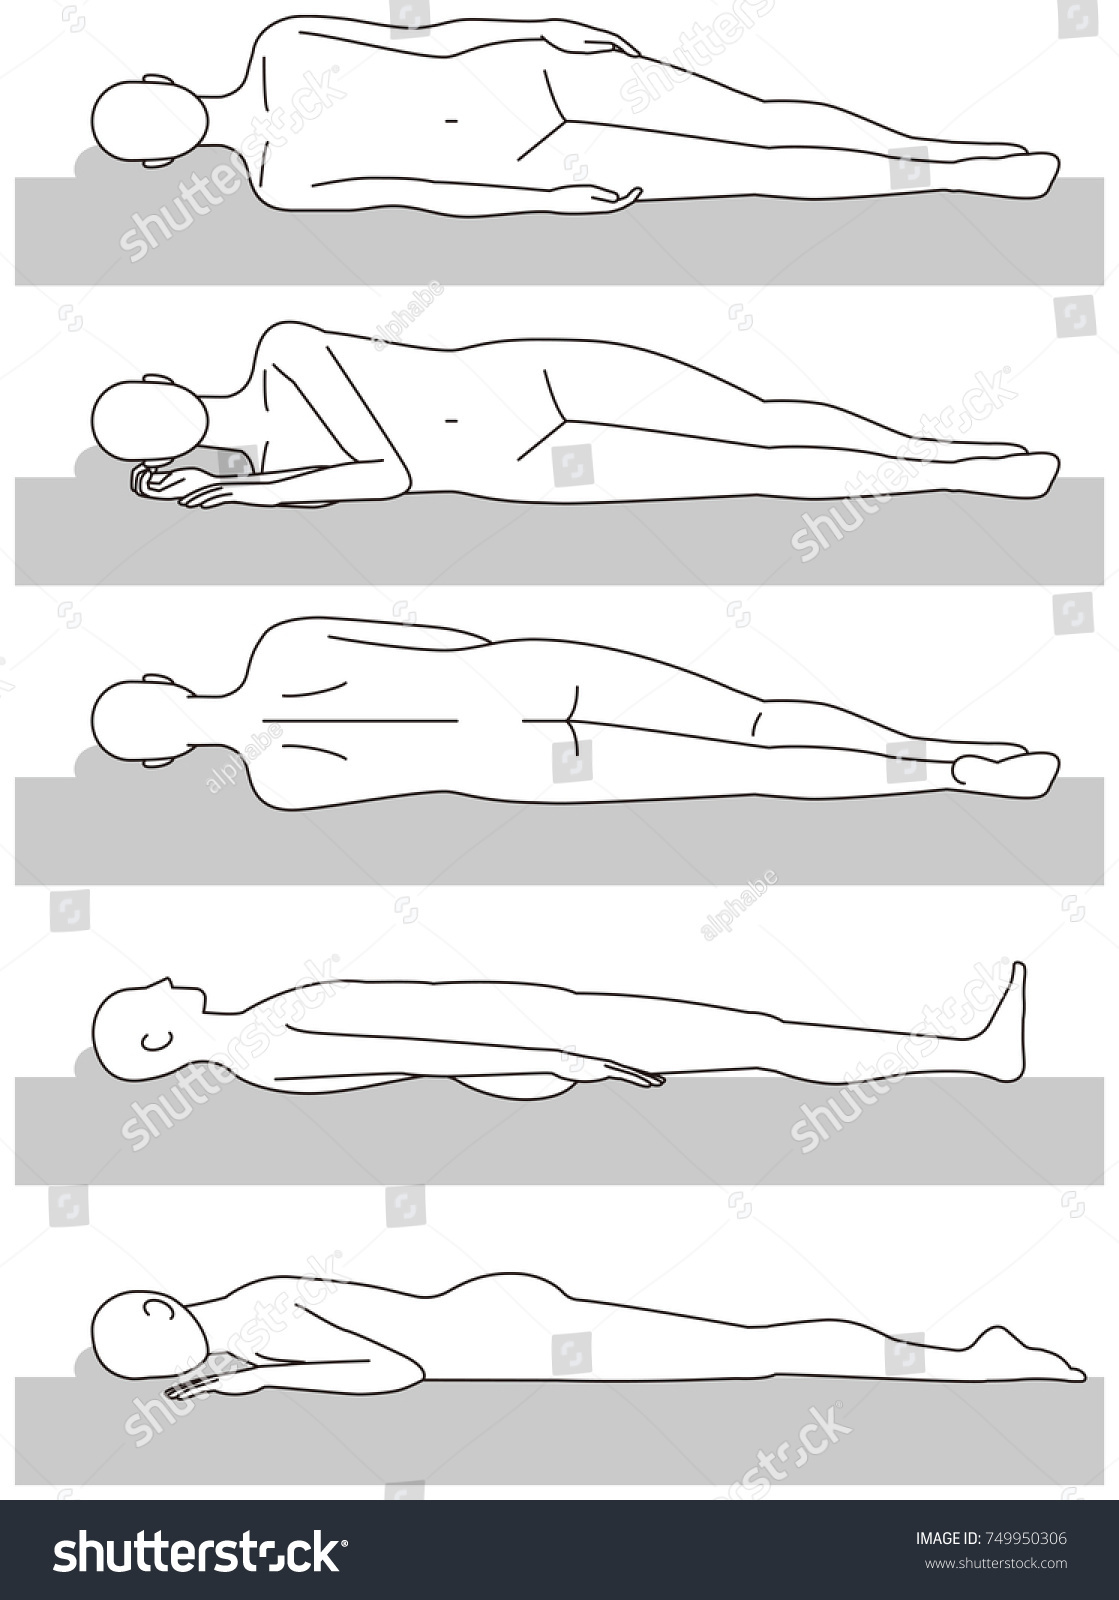 SVG of Sleeping posture. Upward. Stabbing svg